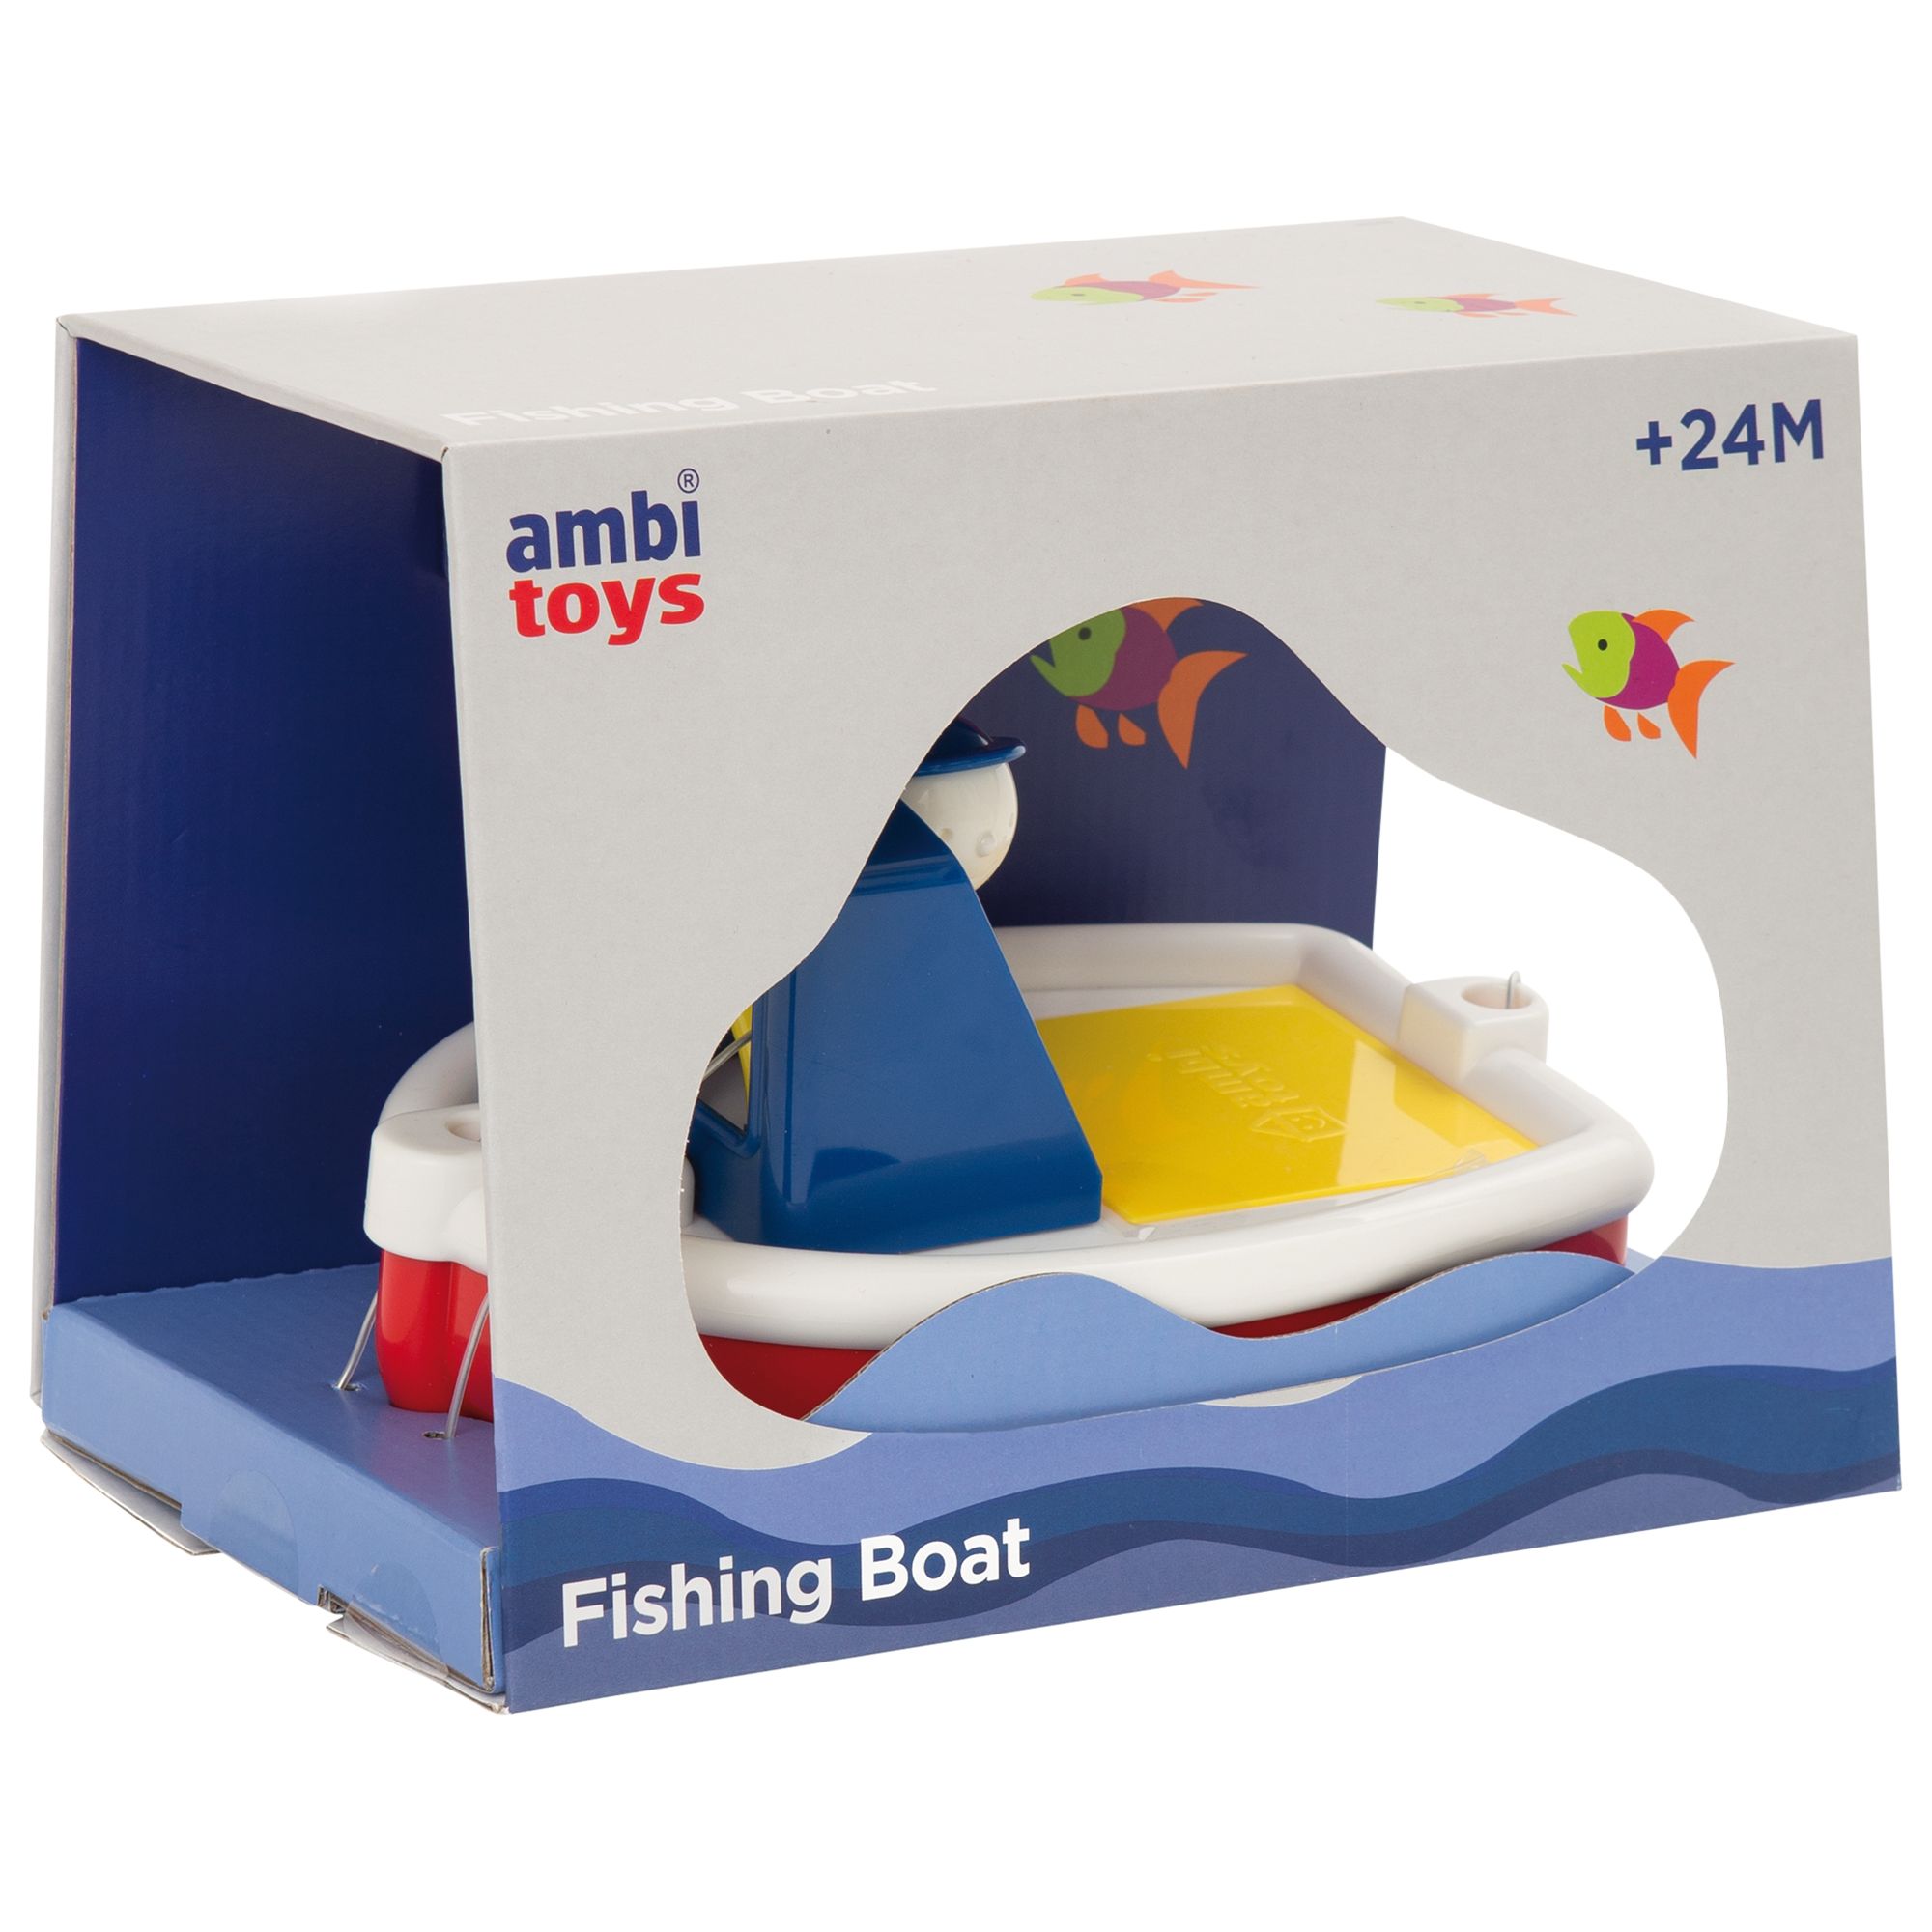 ambi toys fishing boat